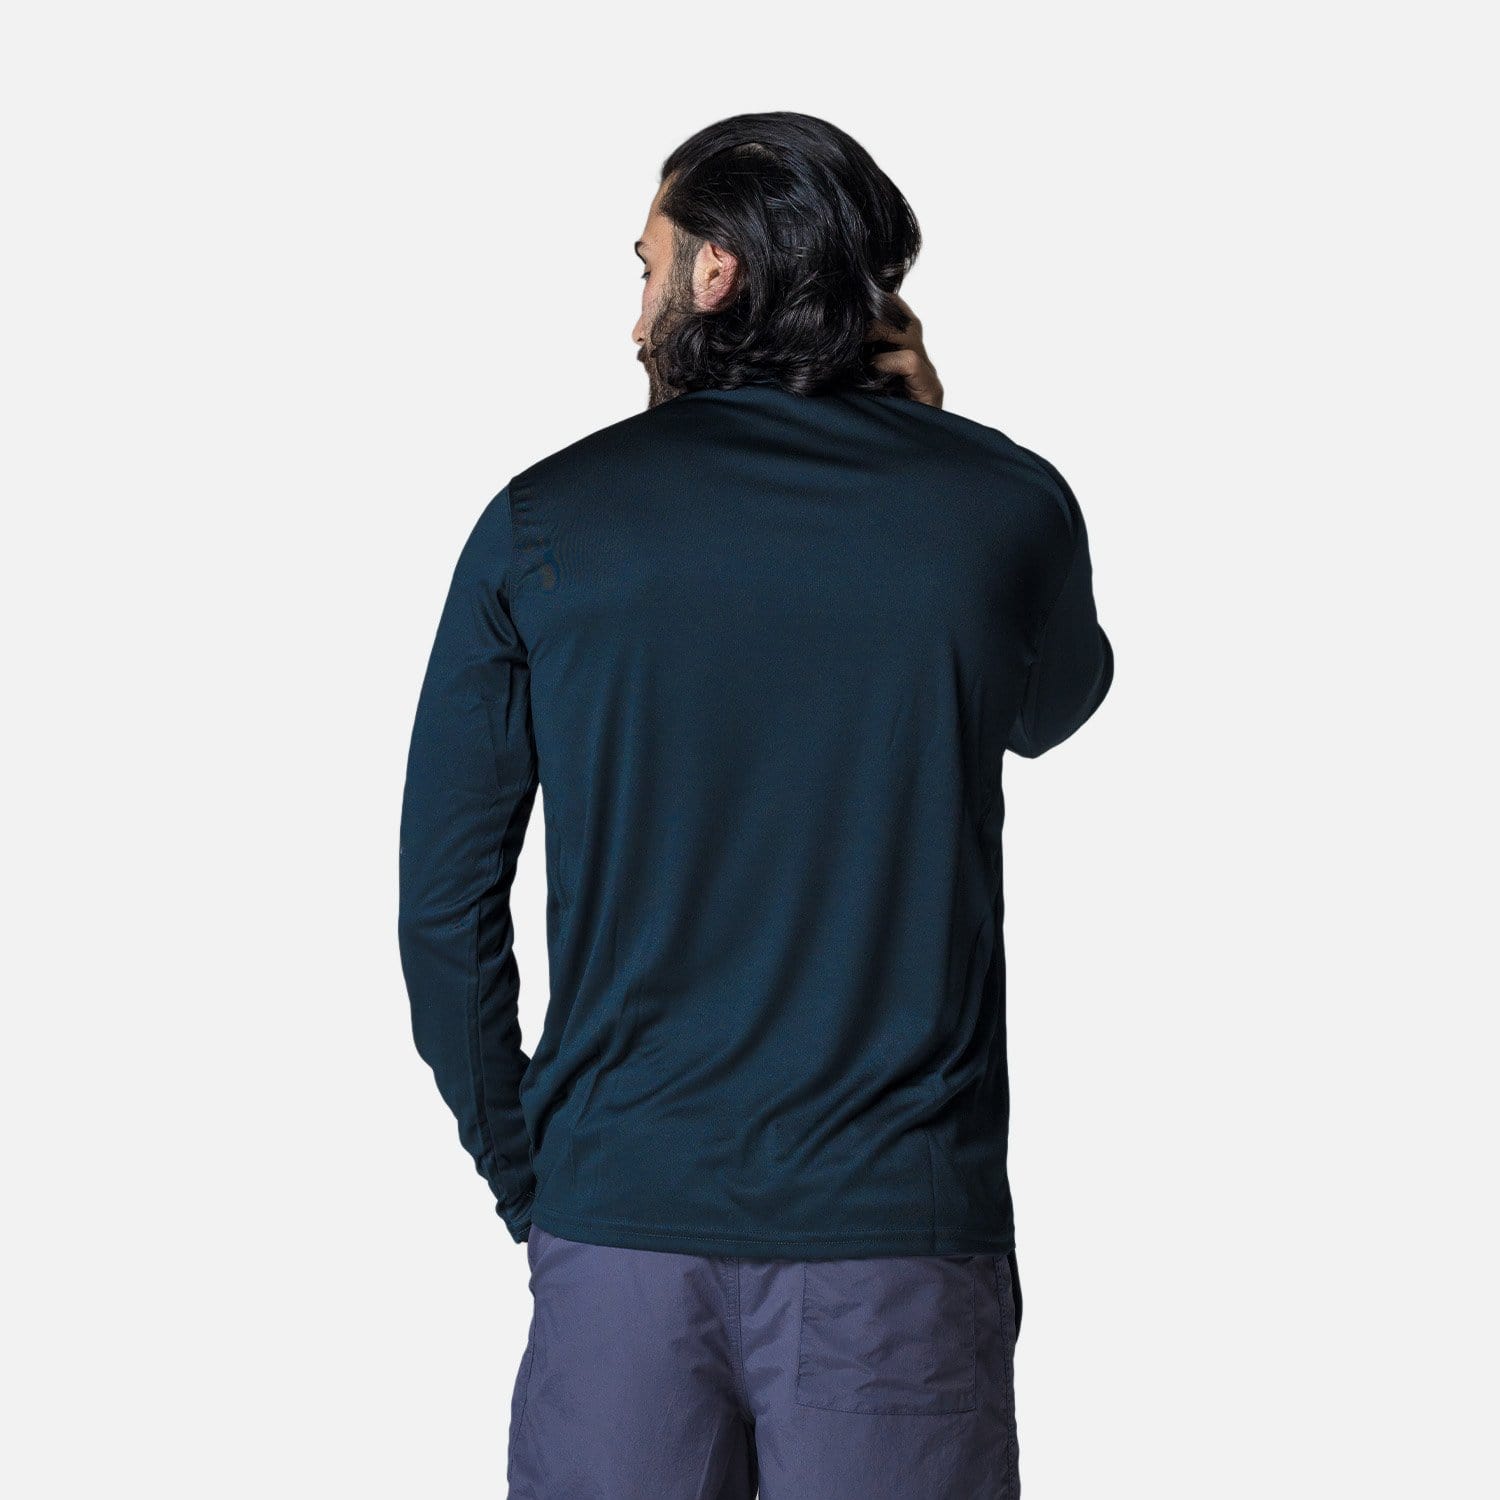 Vapor Apparel Men's Outdoor UPF 50+ Long Sleeve T-Shirt, UV Sun Protection  for Fishing, Running, Hiking, S, Arctic Blue